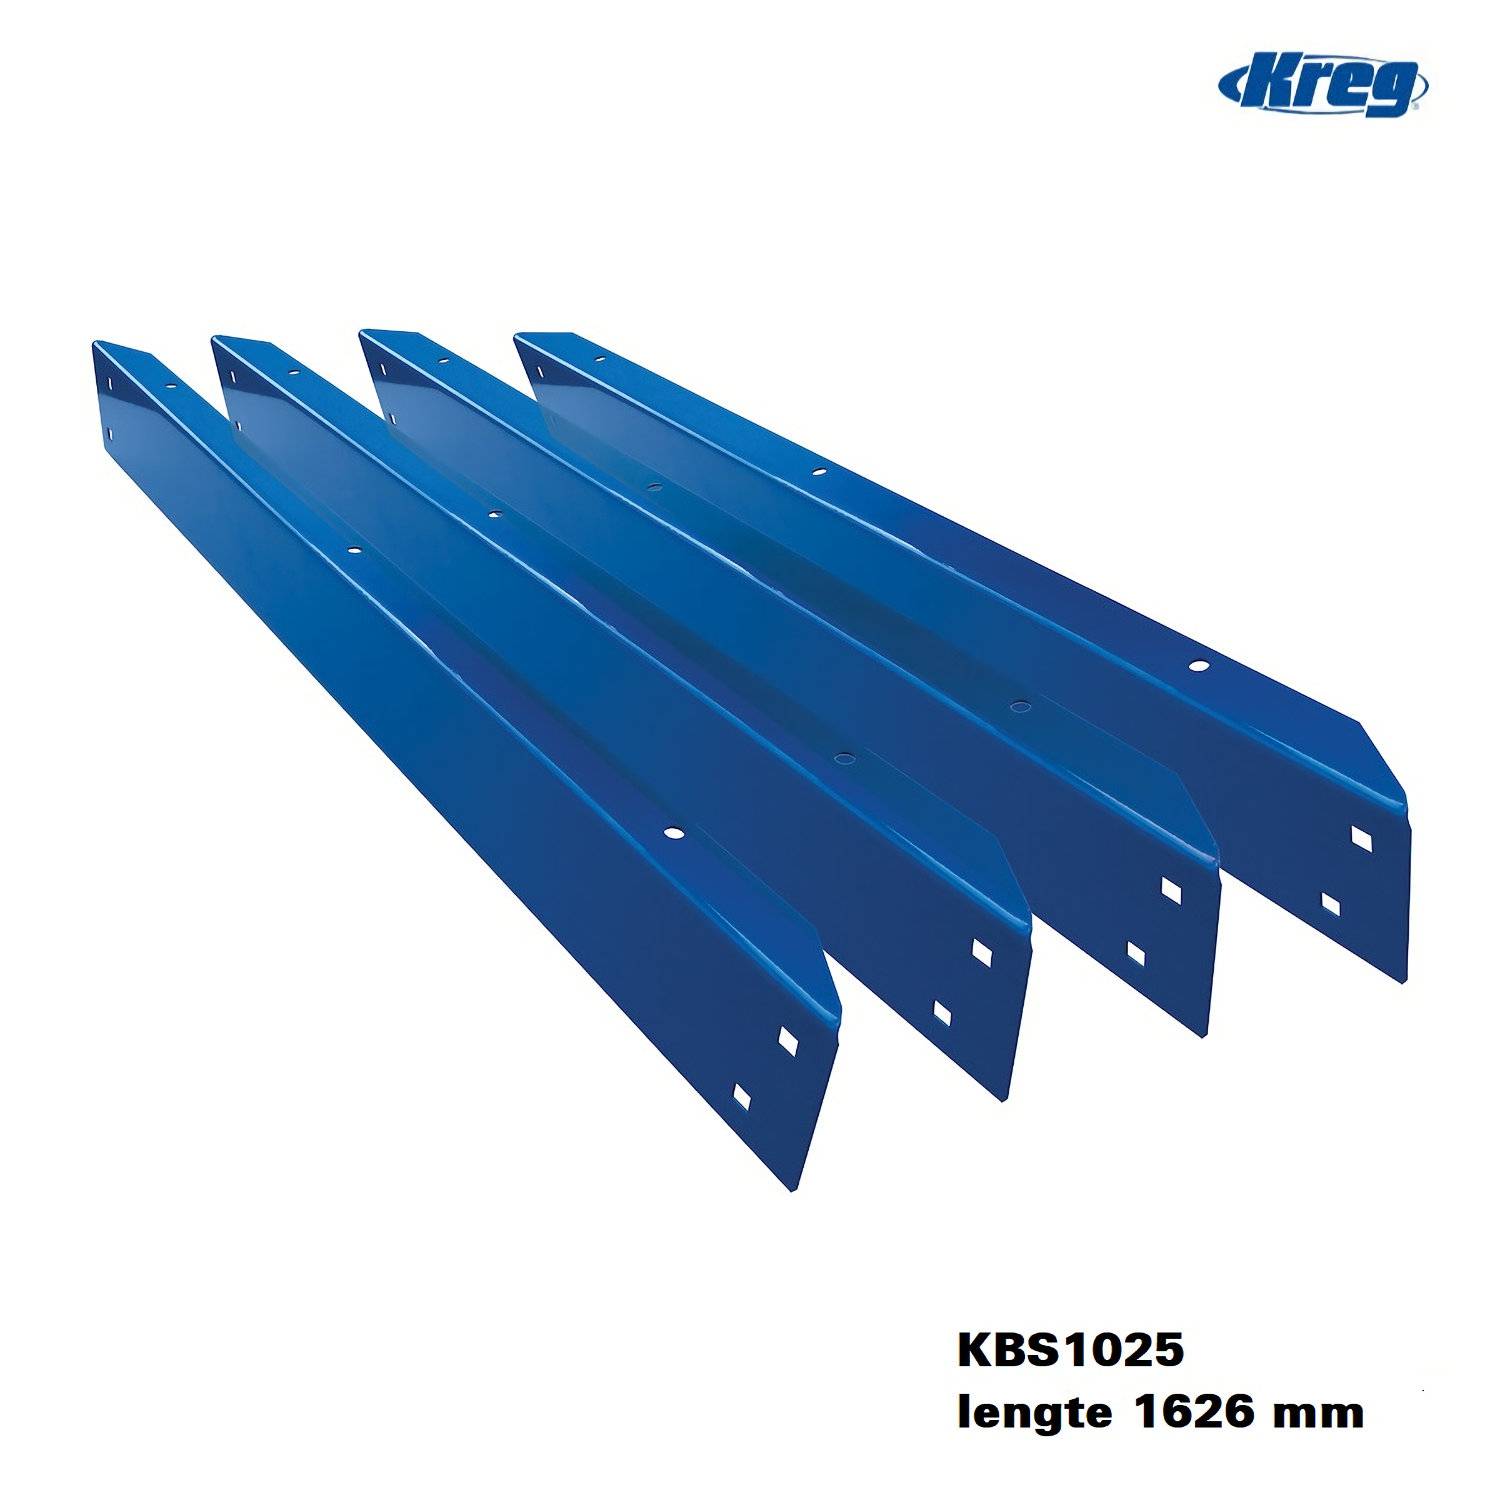 werkbank-rails-Kreg-KBS1025-1626mm